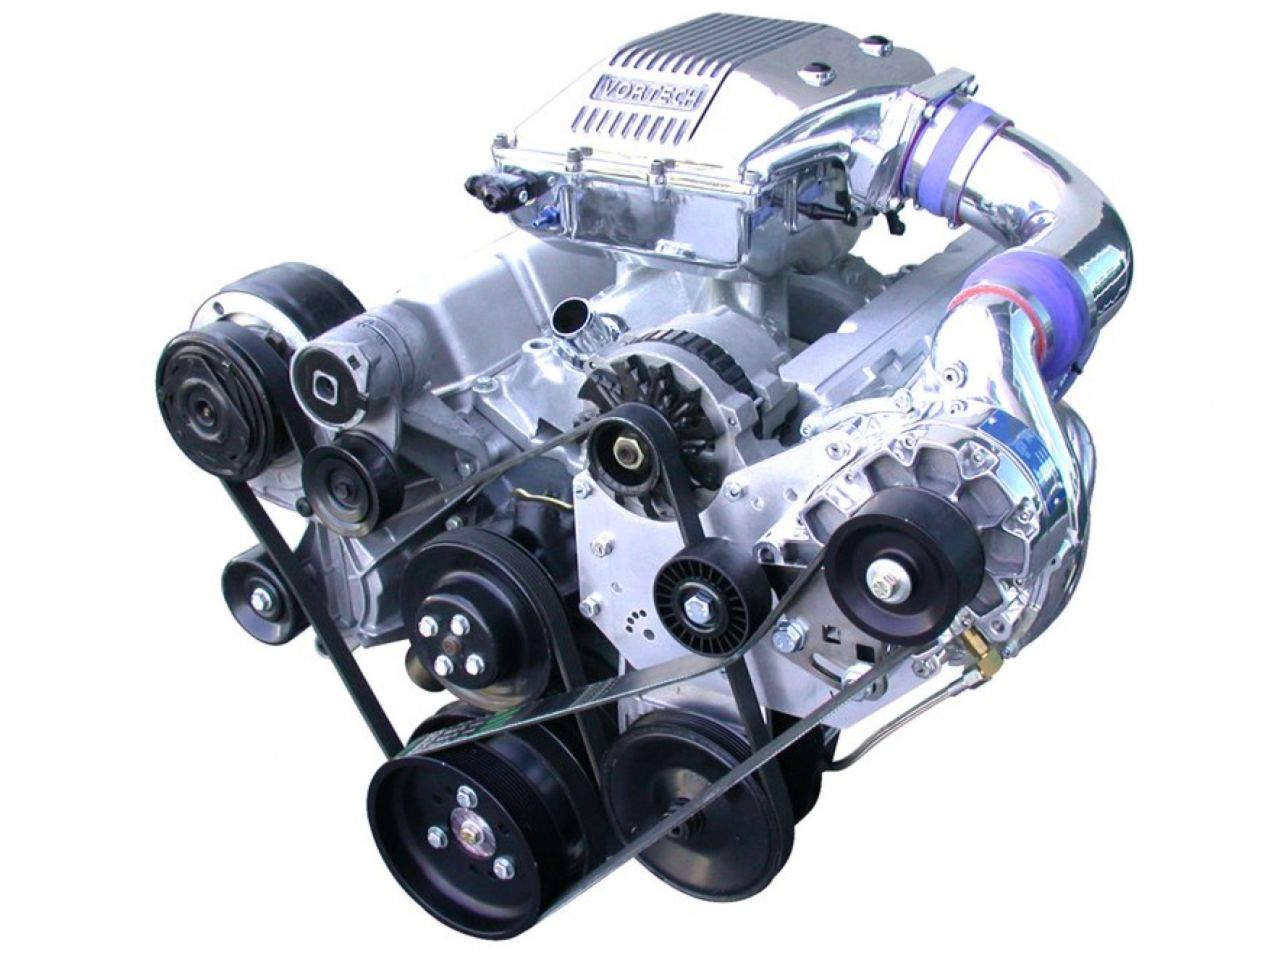 Vortech Carbureted Small Block Chevrolet Tuner Kit w/V-2 Si, Satin